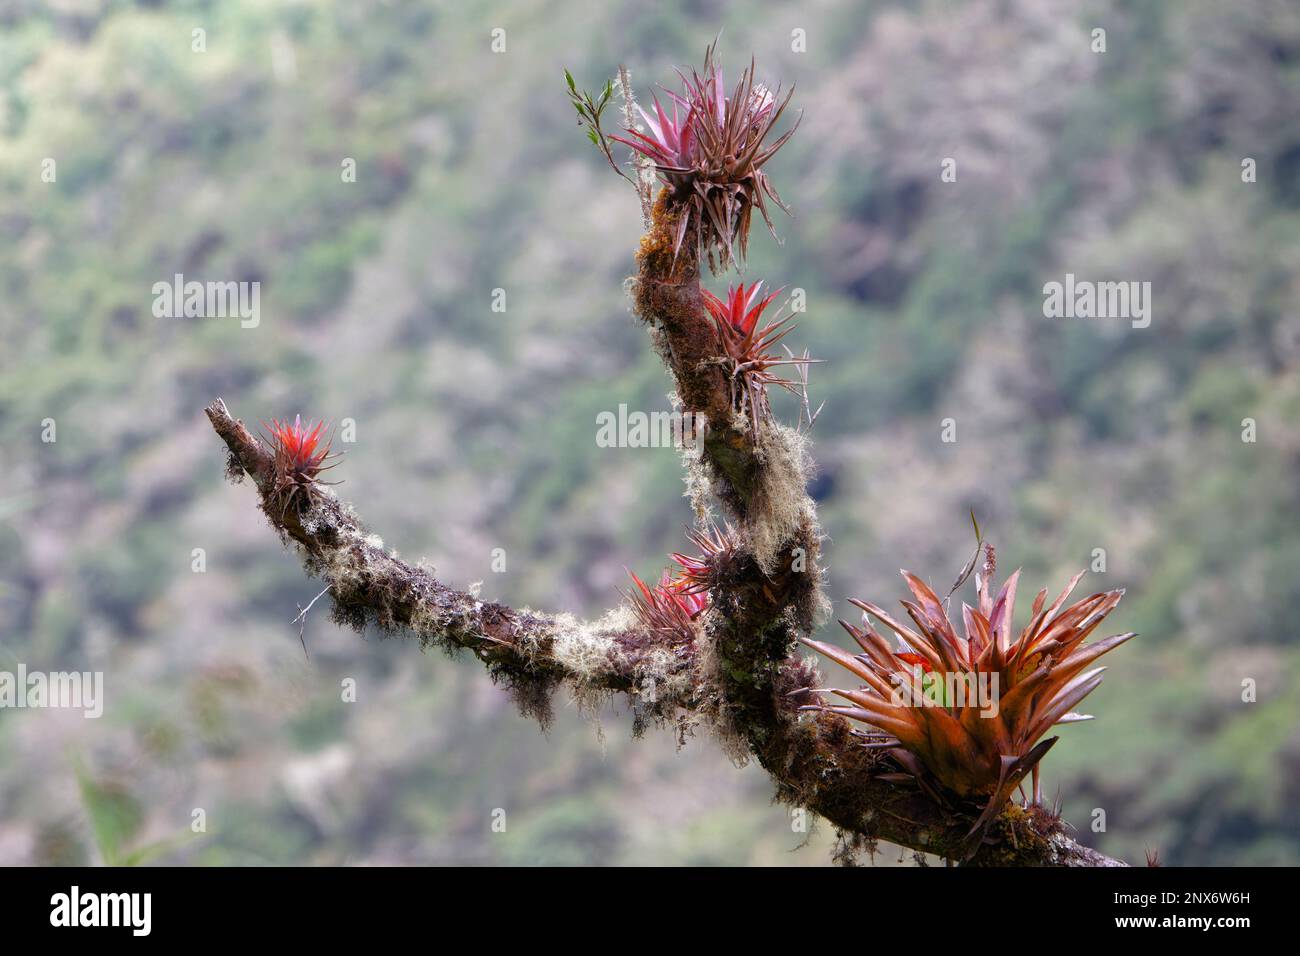 Bromelias growing on tree trunk, Tropical Cloud Forest, Manu National Park, Peru Stock Photo